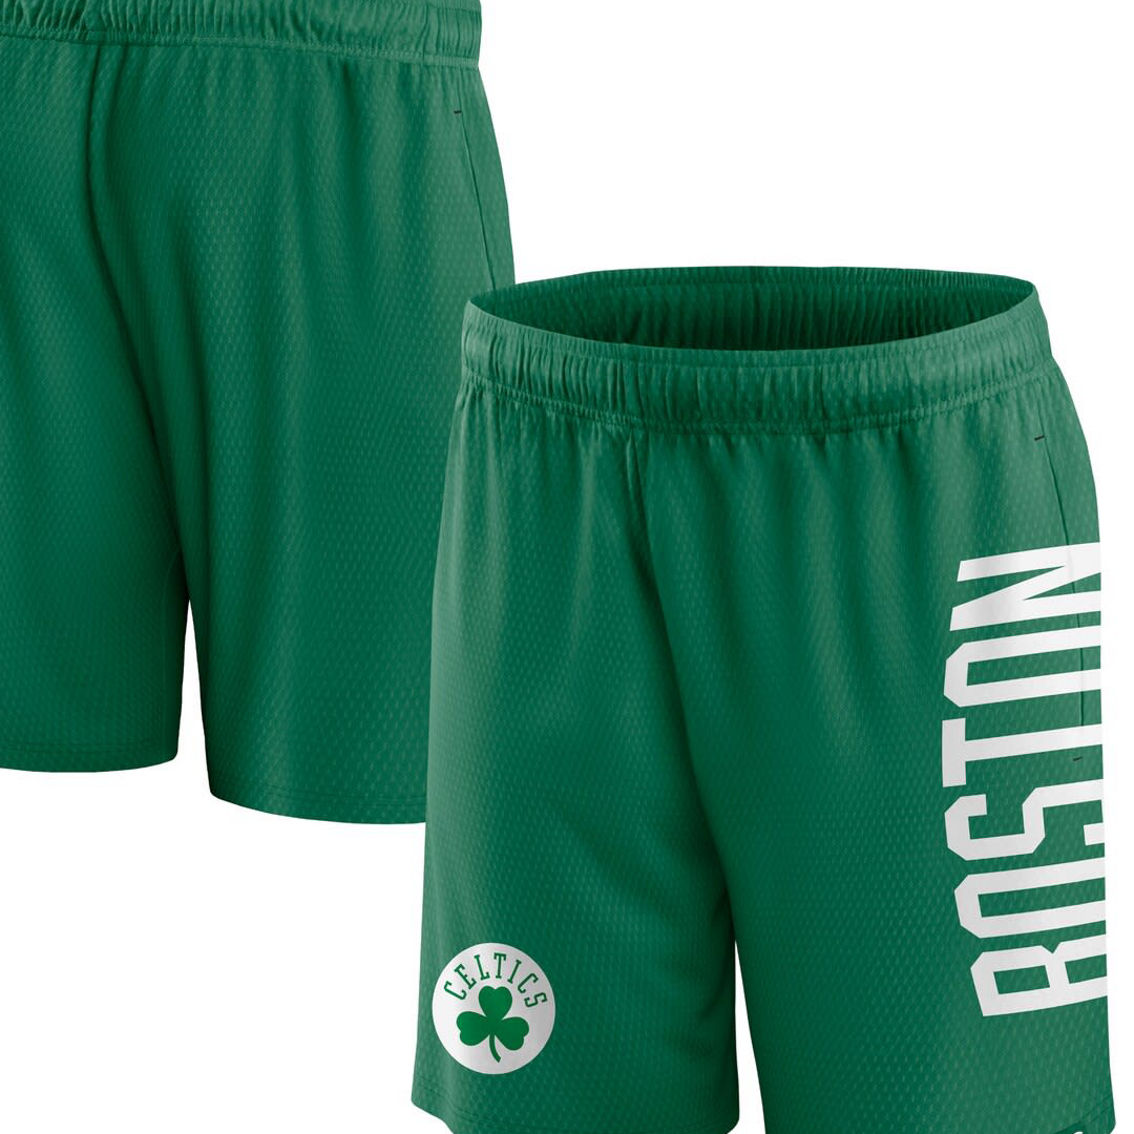 Fanatics Branded Men's Kelly Green Boston Celtics Up Mesh Shorts - Image 2 of 4